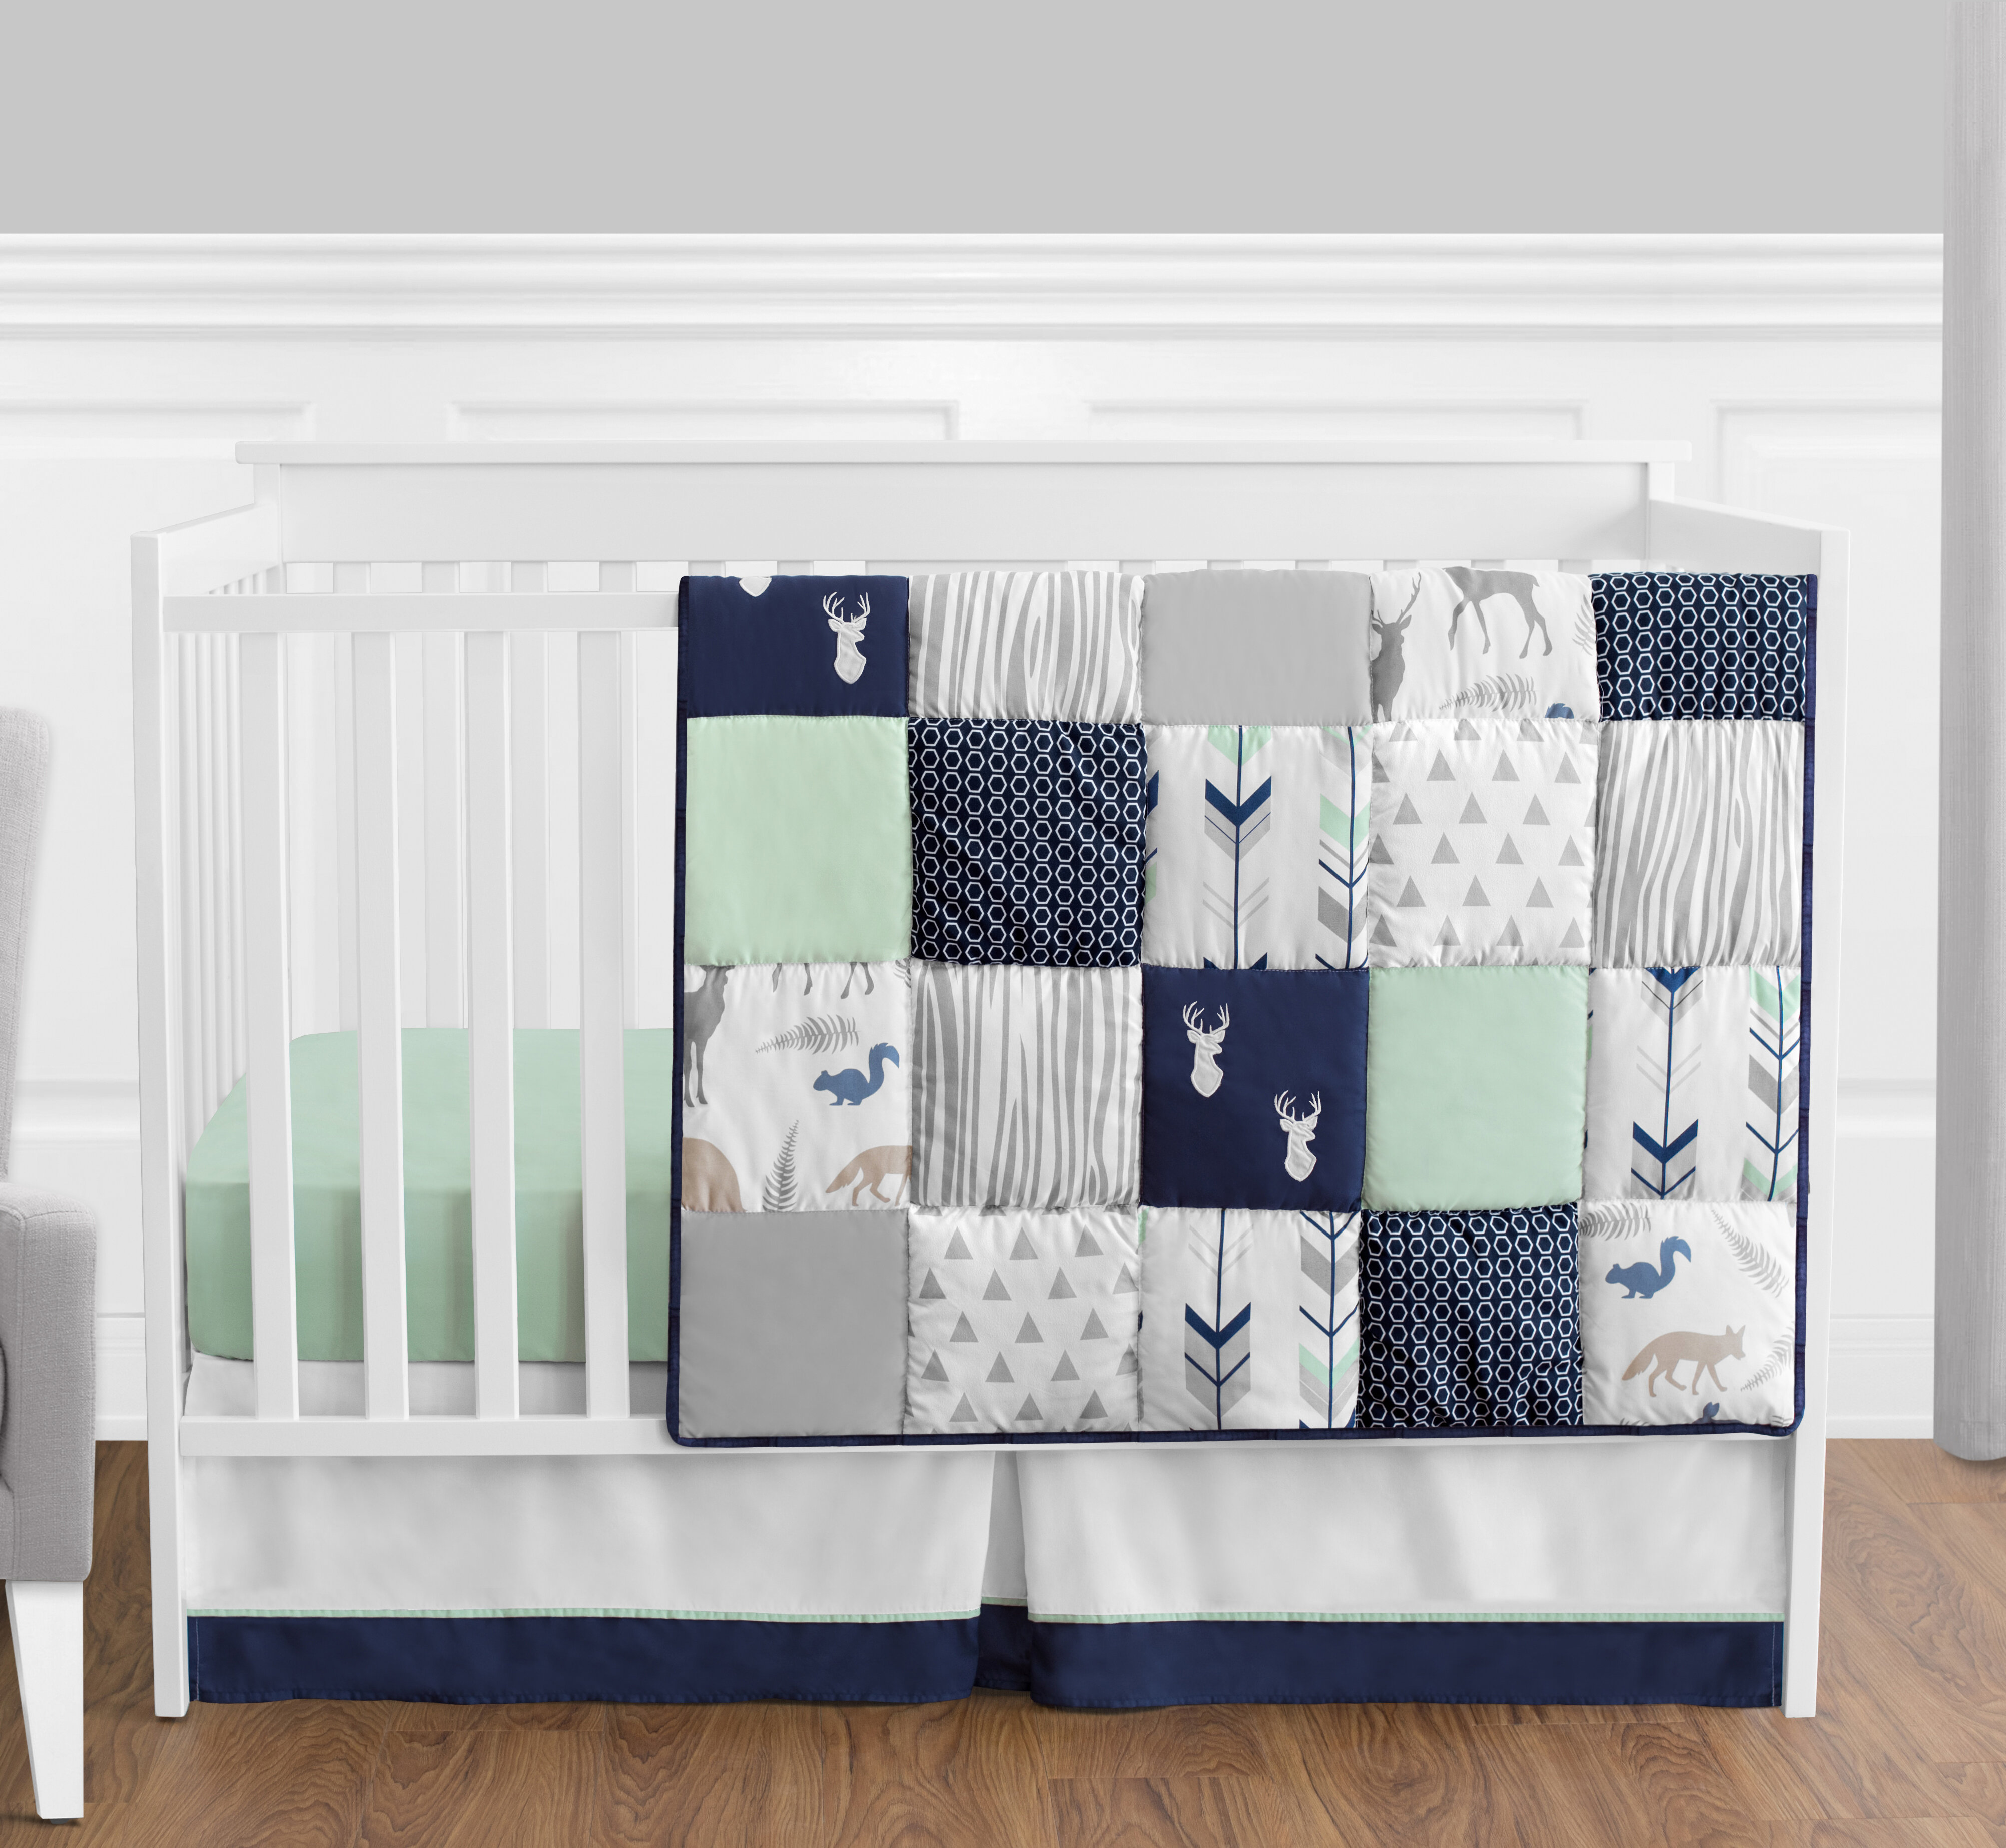 Robot Crib Sheet ~ Robot Crib Bedding ~ Baby Bedding ~ Baby Shower Gift ~ Robot Nursery ~ Quick Ship